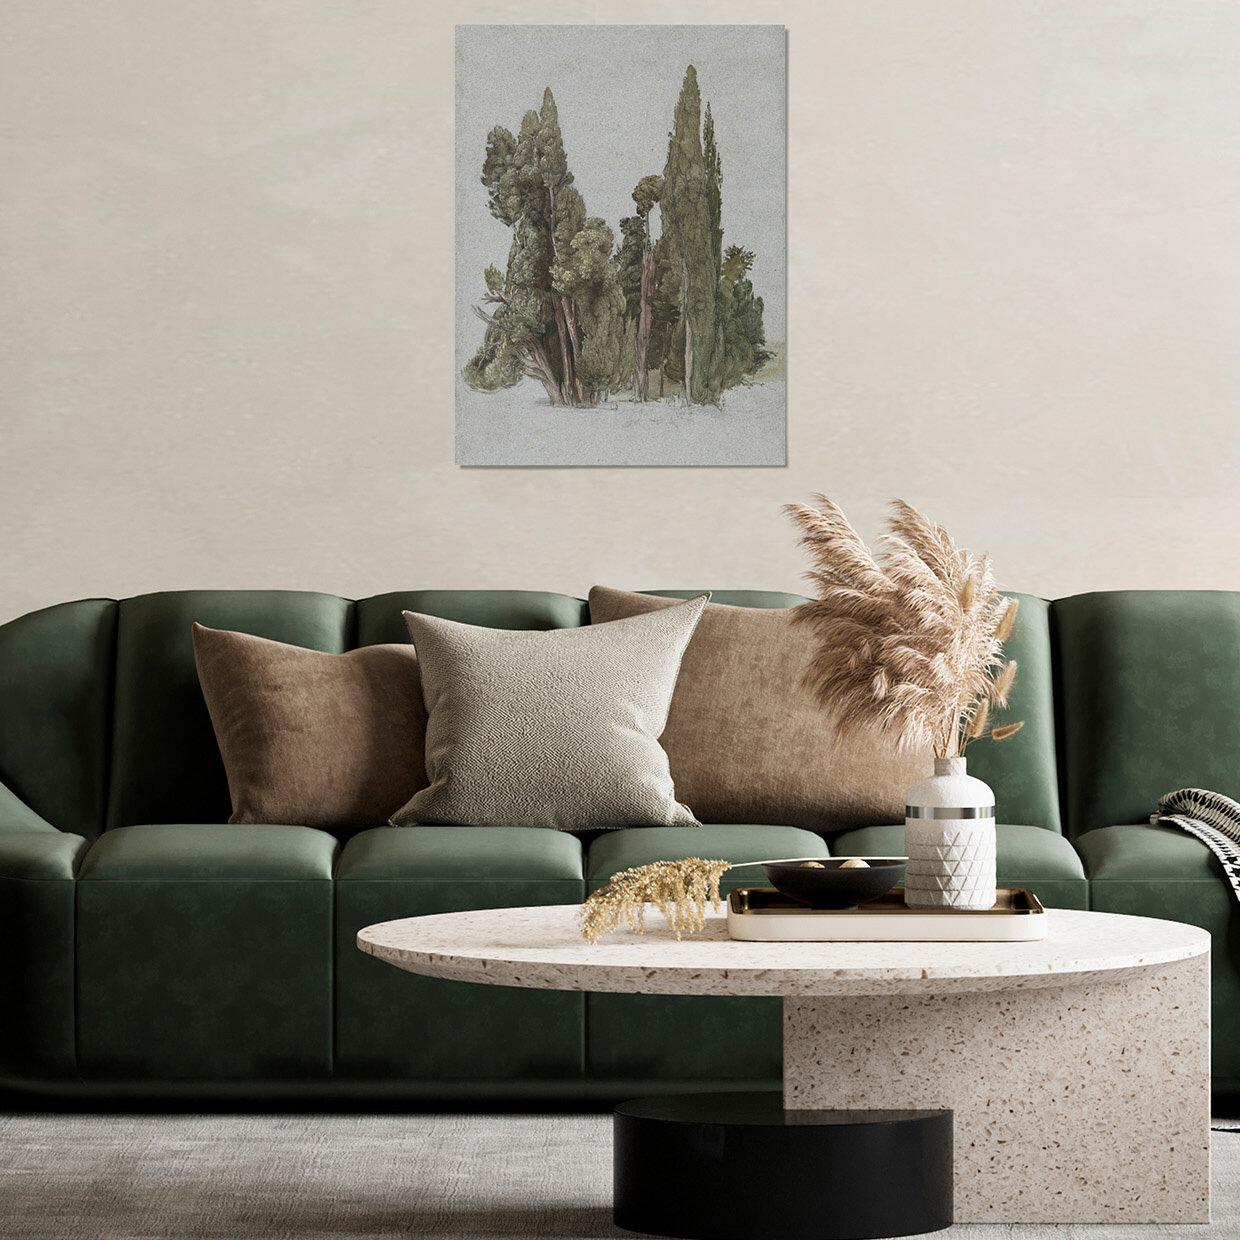 Картина на холсте, репродукция / Сэмюэл Палмер - The Cypresses / Размер 30 x 40 см